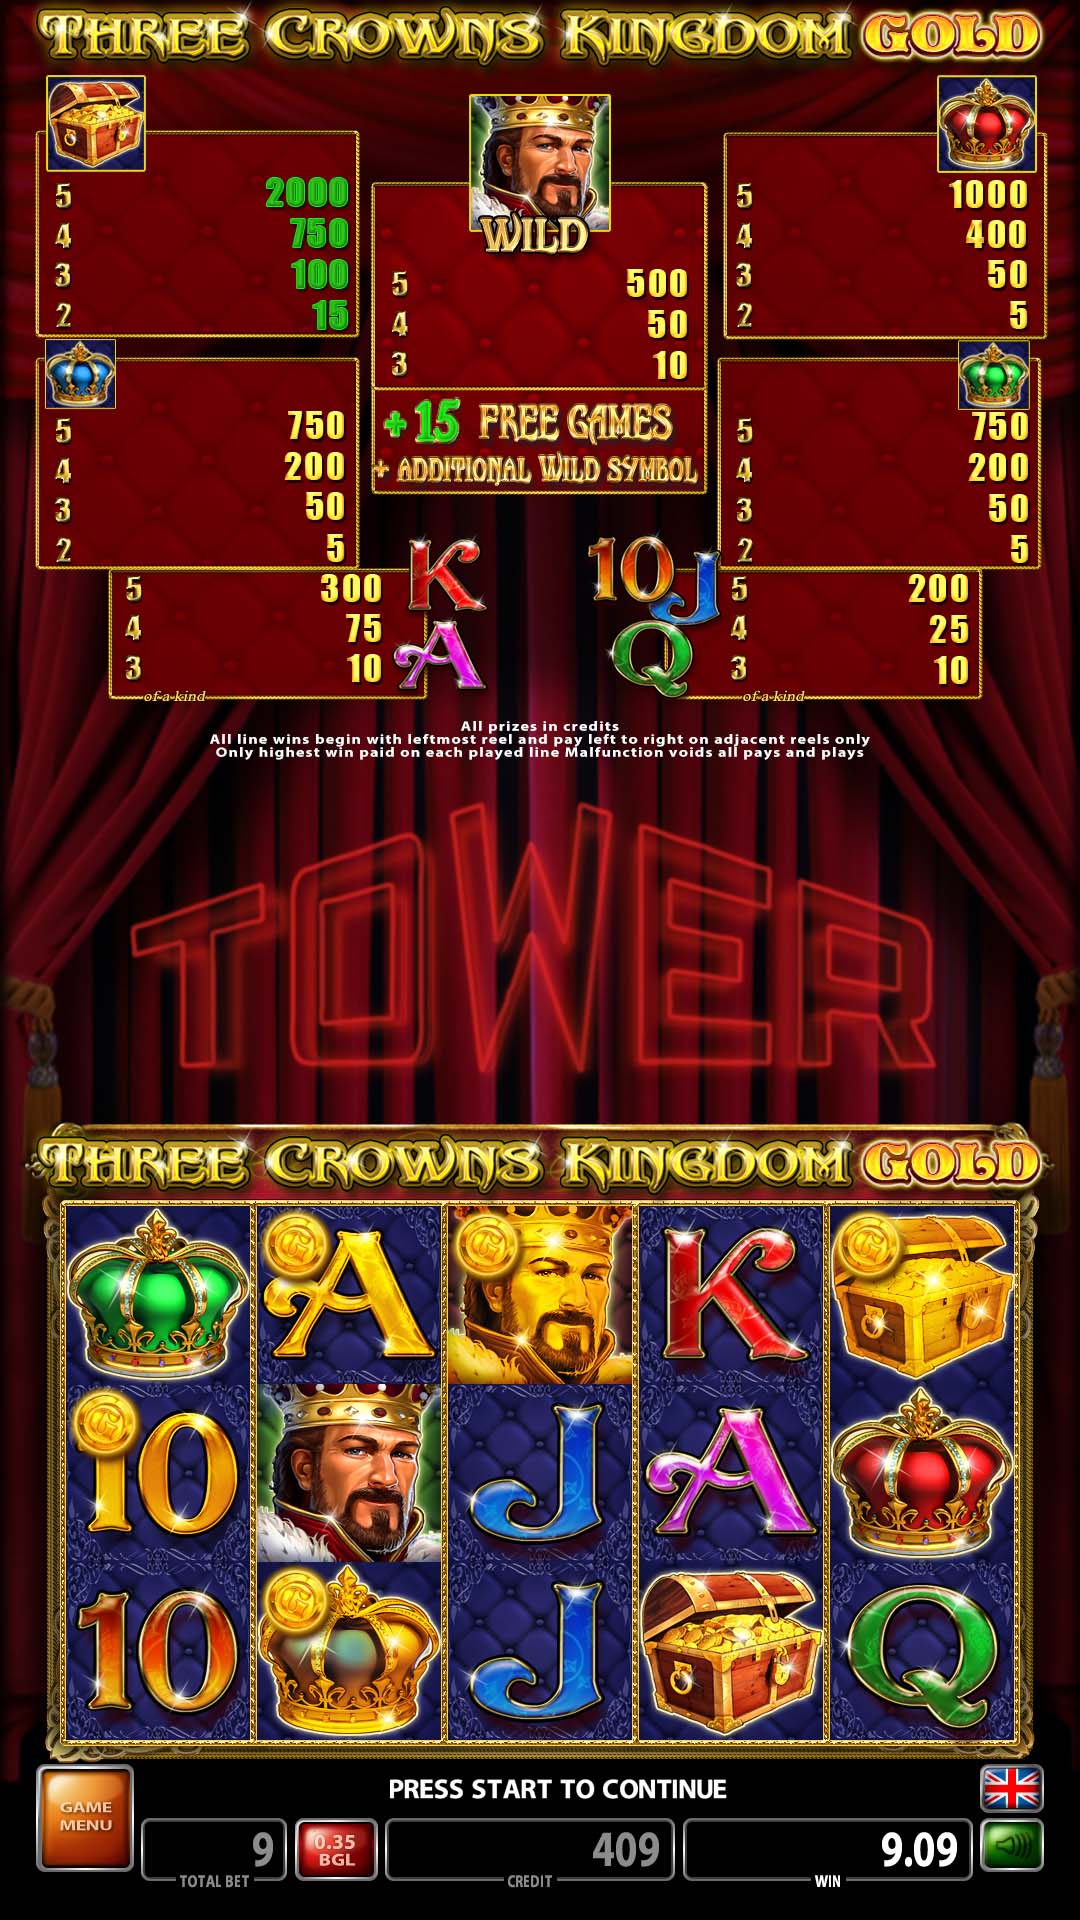 TCK_tower_5x3_Gold_01_main.jpg